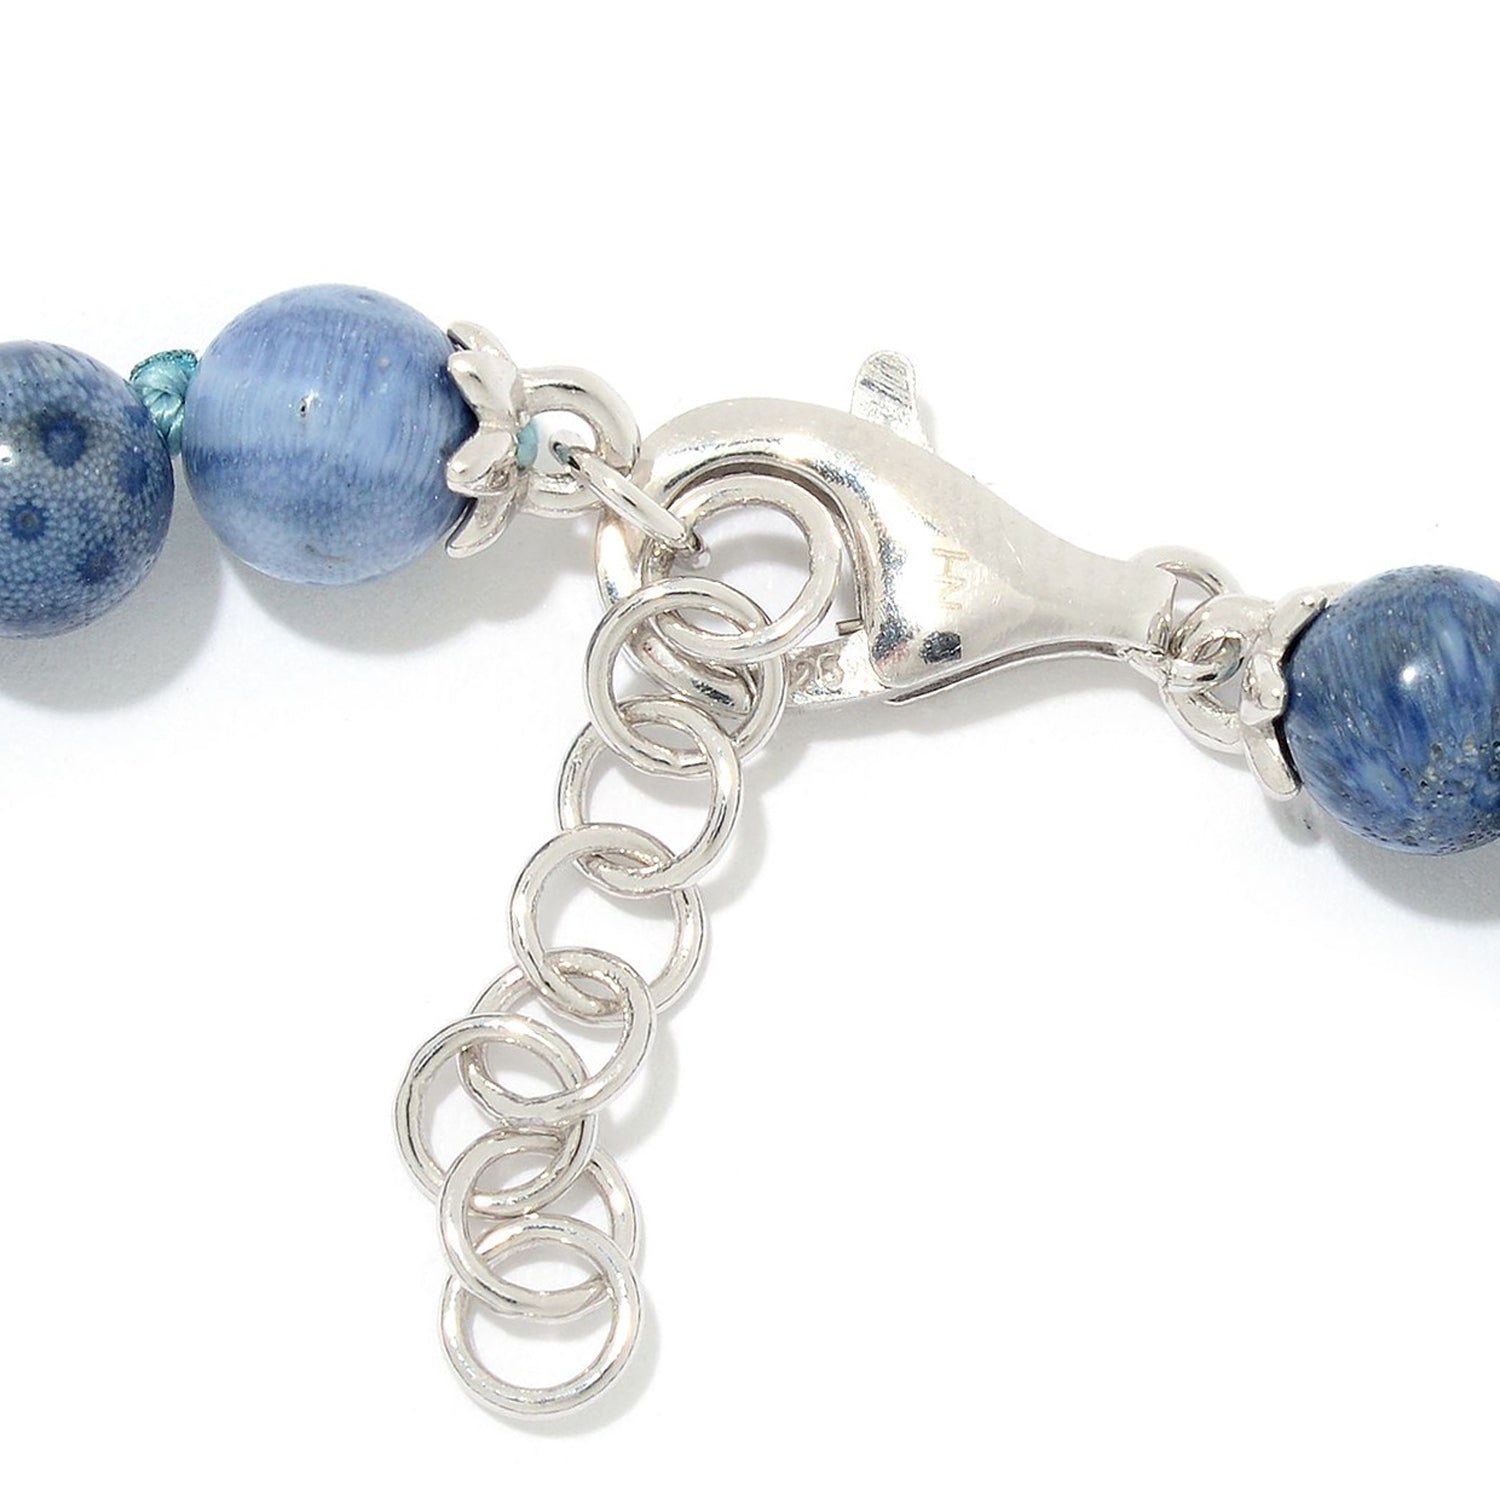 Gems en Vogue Kaolin Turquoise & Blue Coral Beaded Hamsa Bracelet